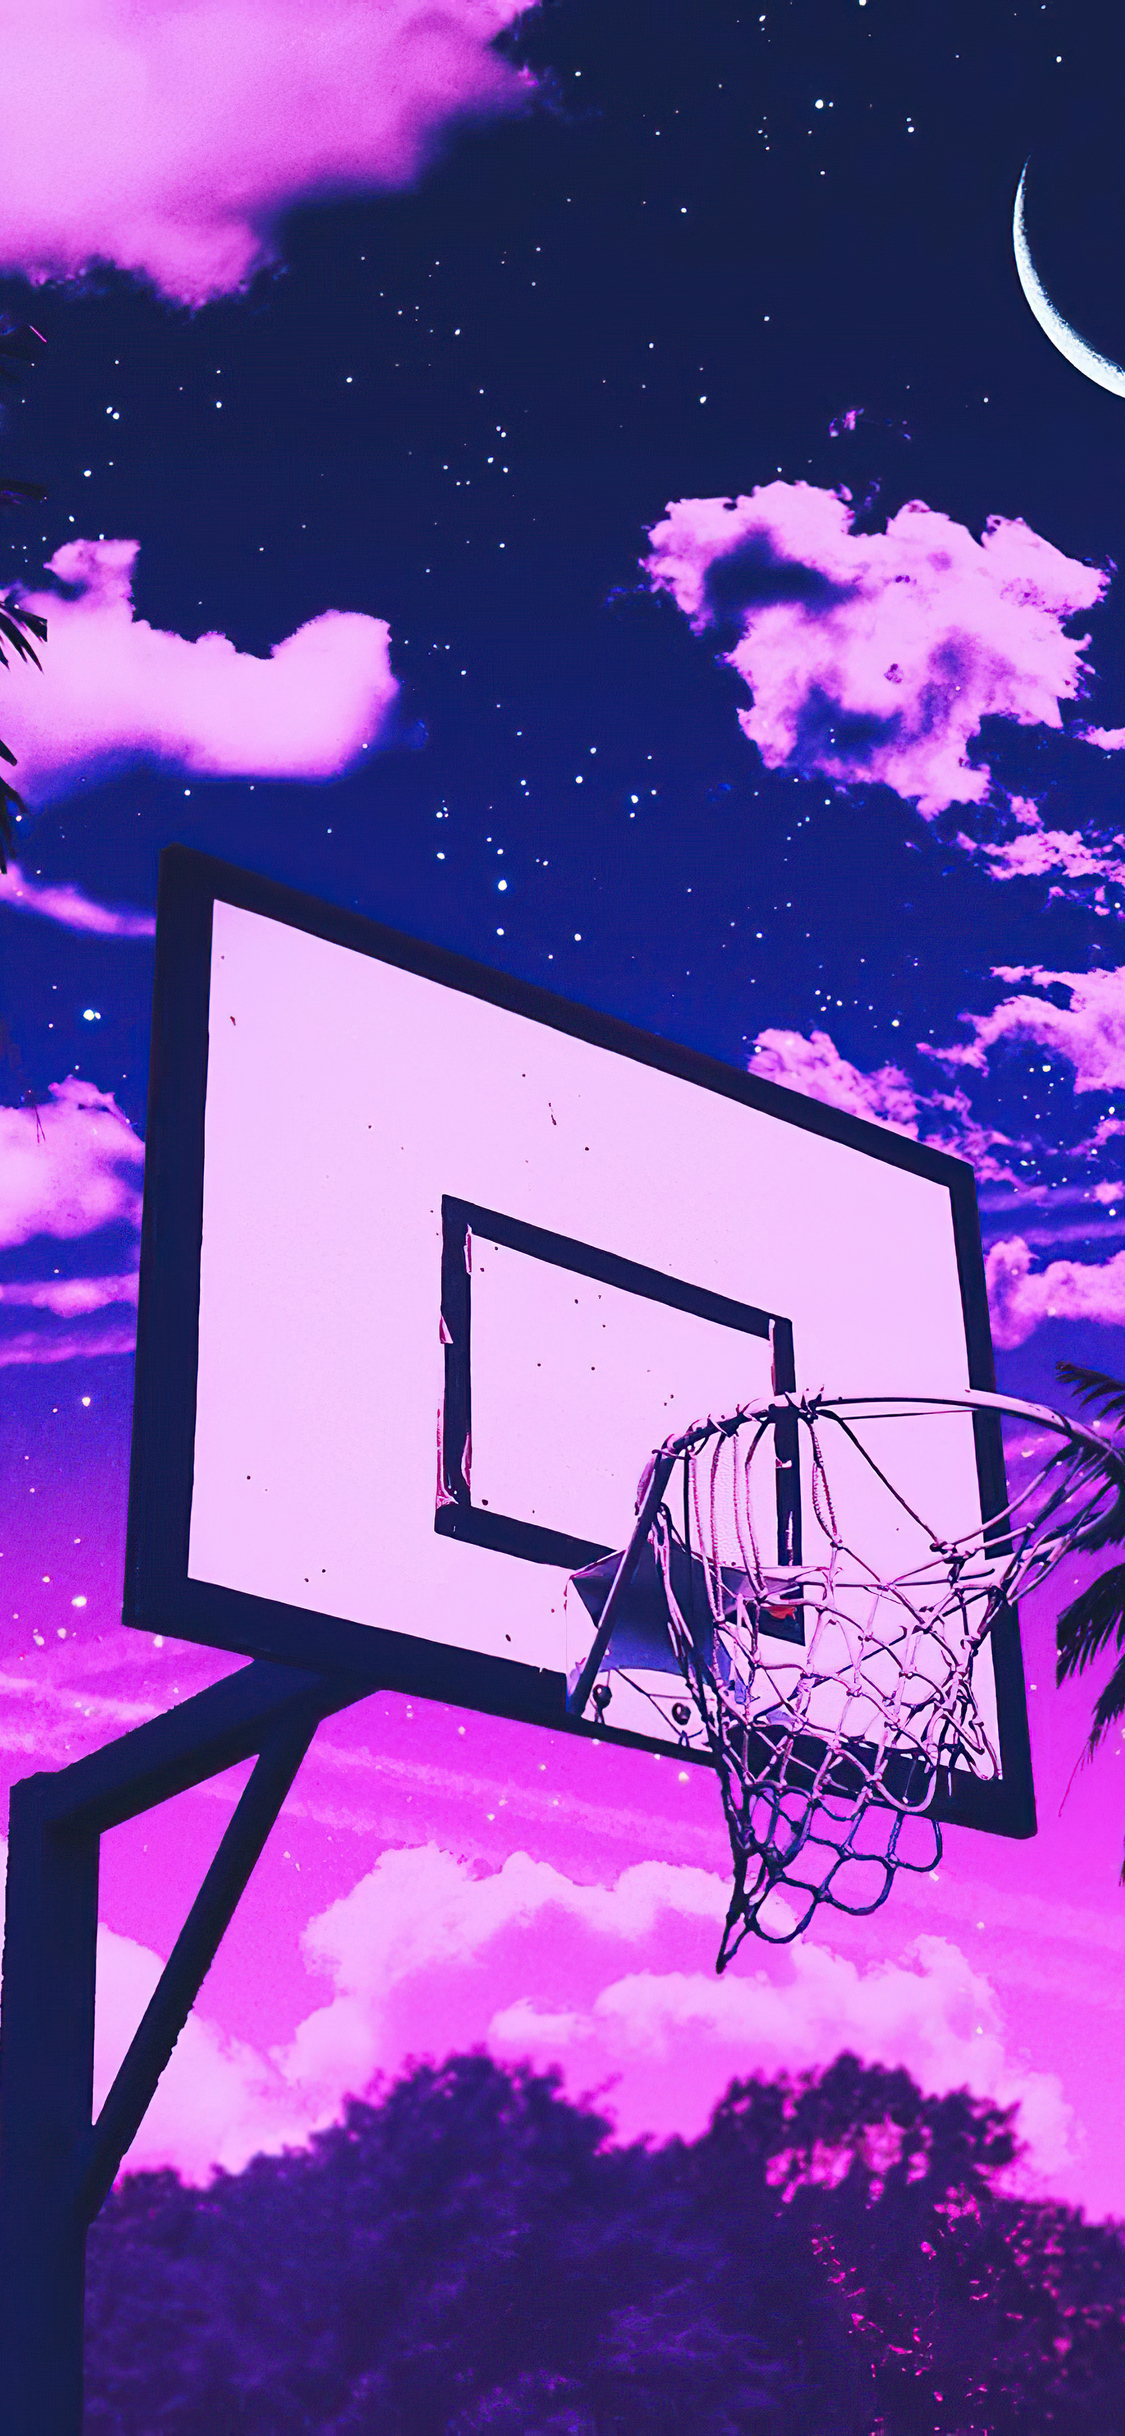 Basketball Wallpaper iPhone X Wallpaper & Background Download